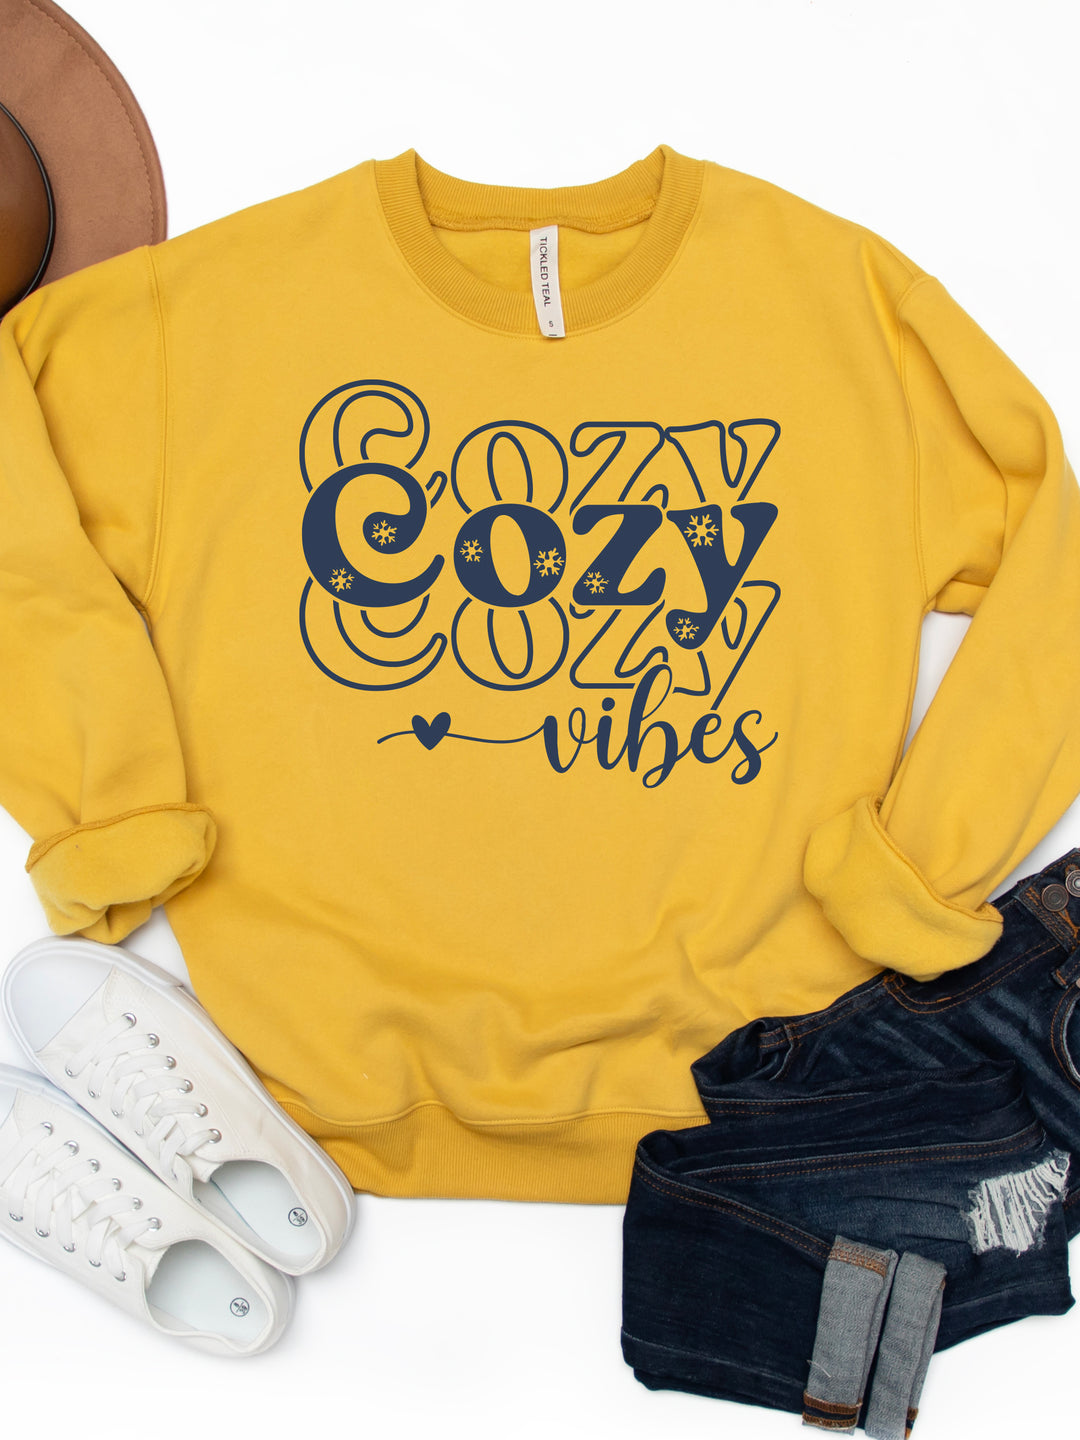 Cozy Cozy Cozy Vibes - Graphic Sweatshirt